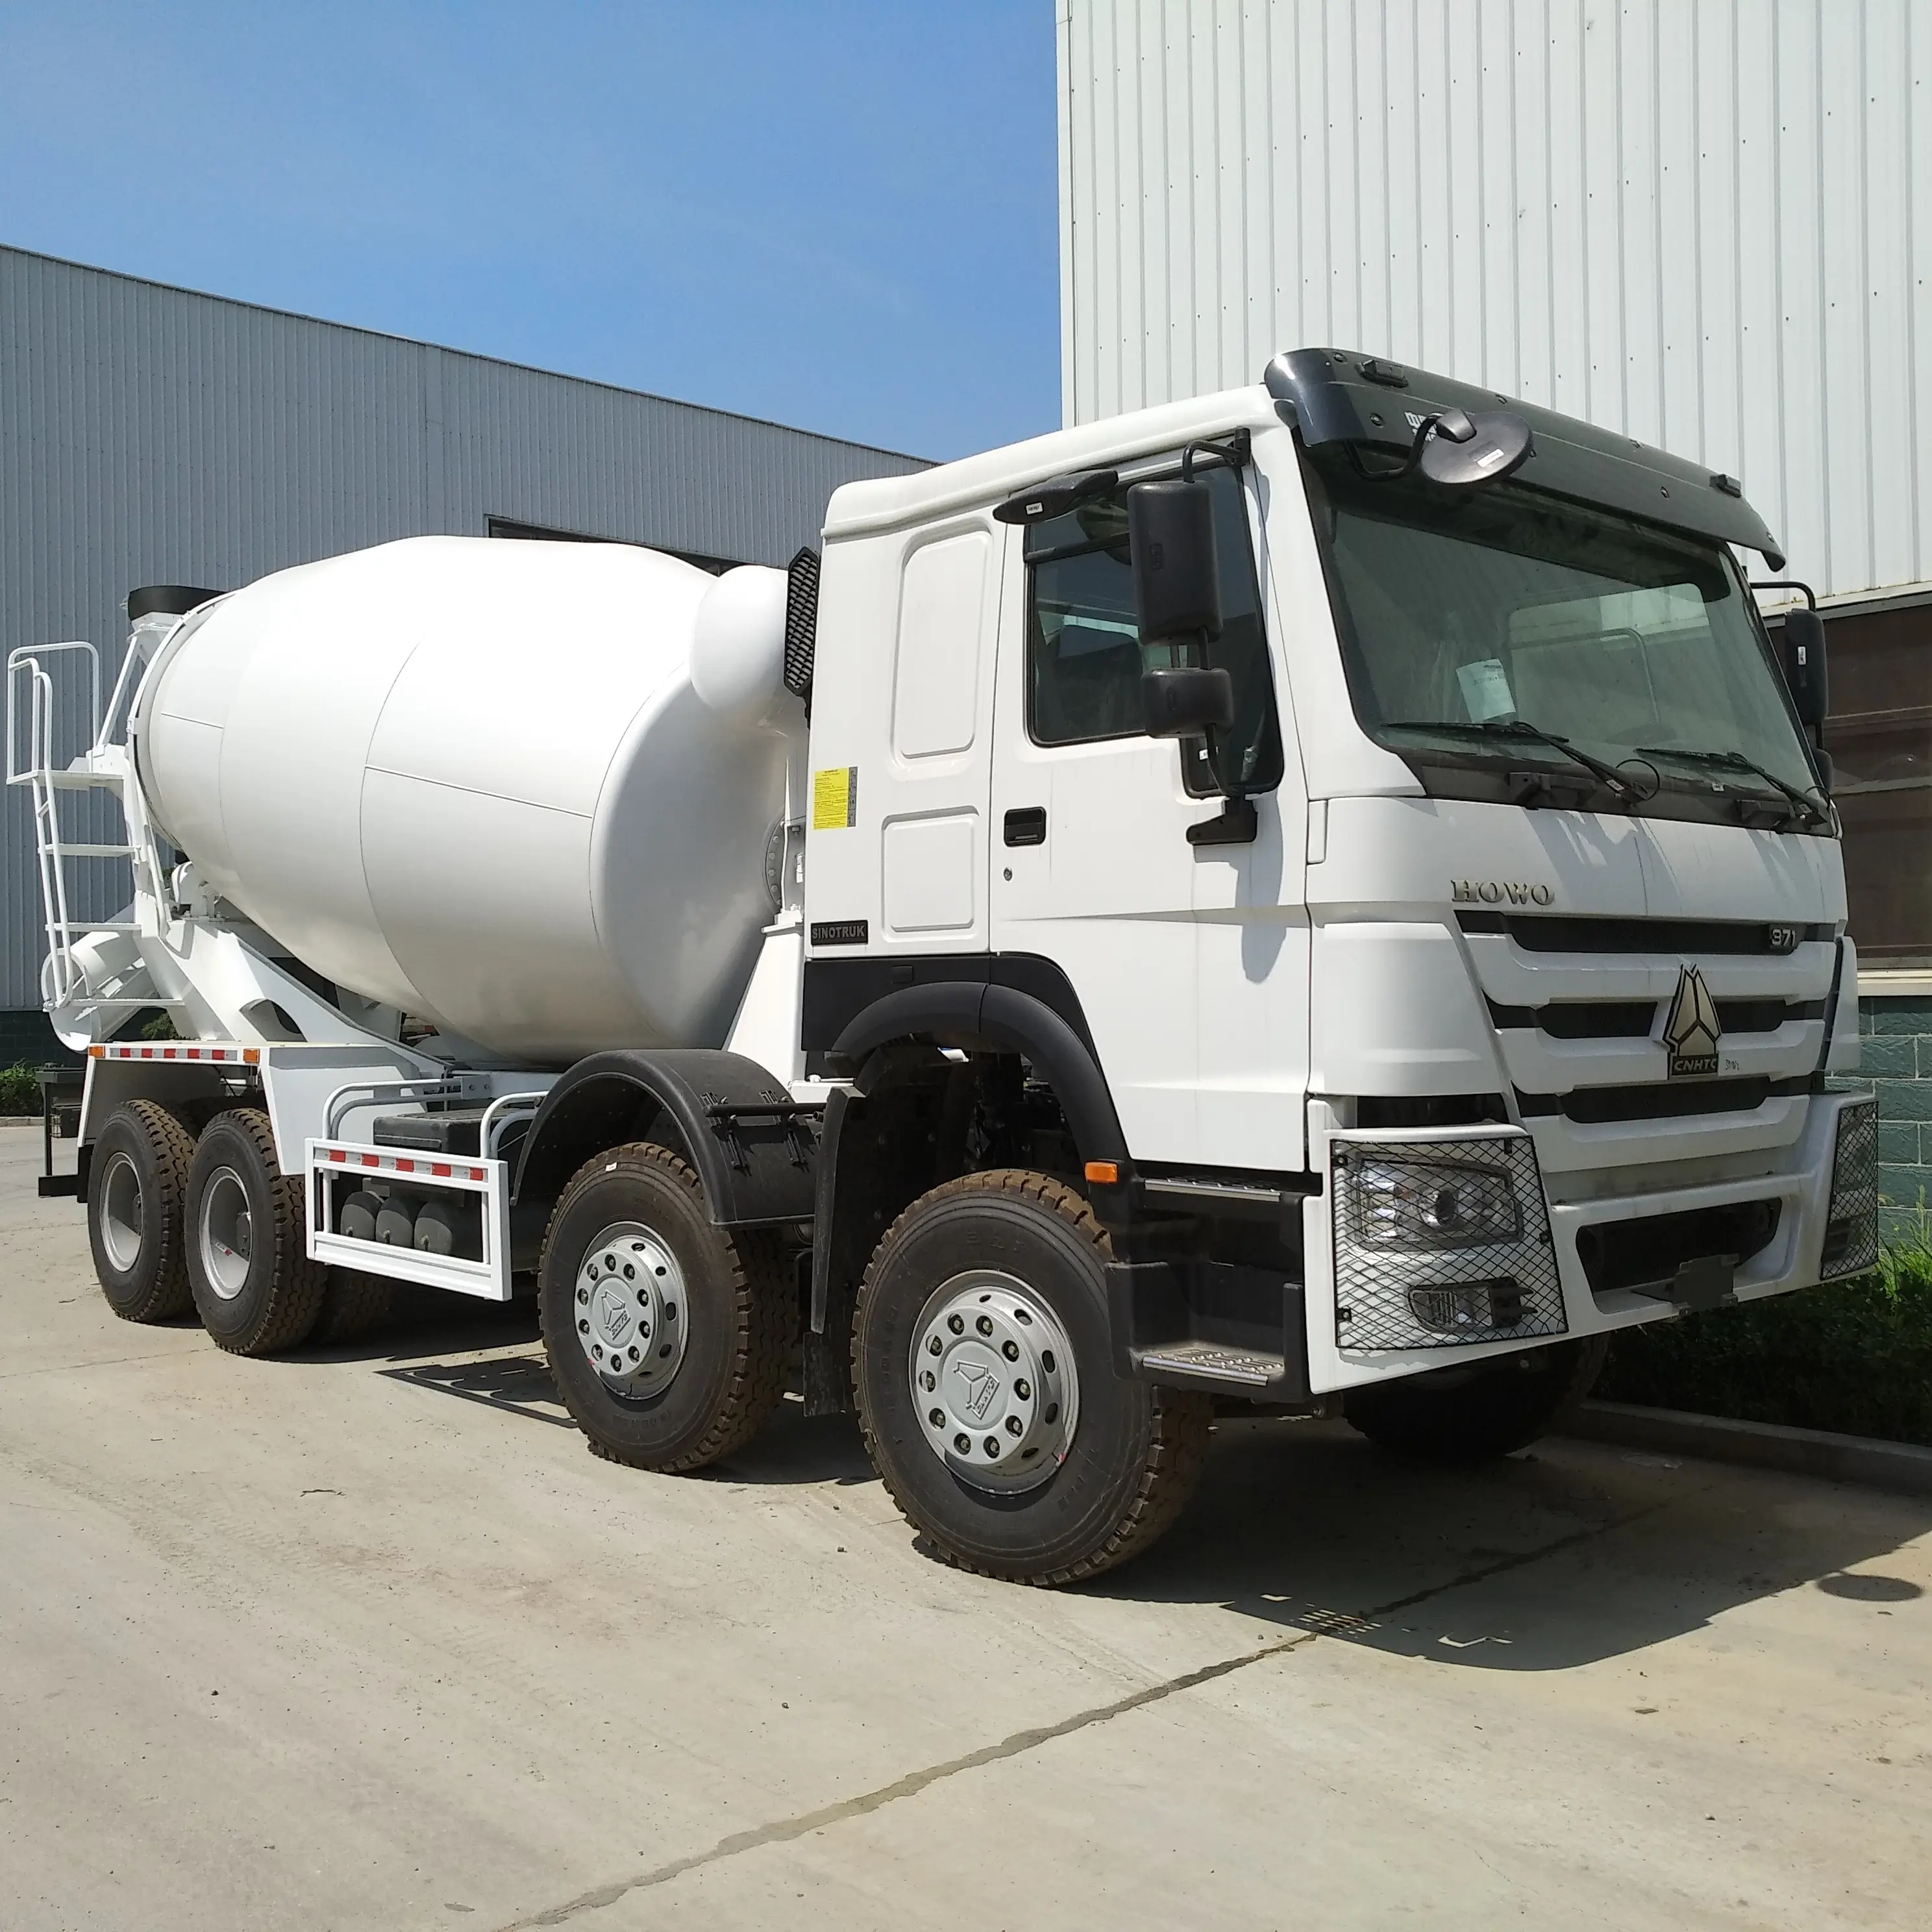 Usato Howo lato sinistro guida 12 metri cubi betoniera betoniera camion in vendita prezzo